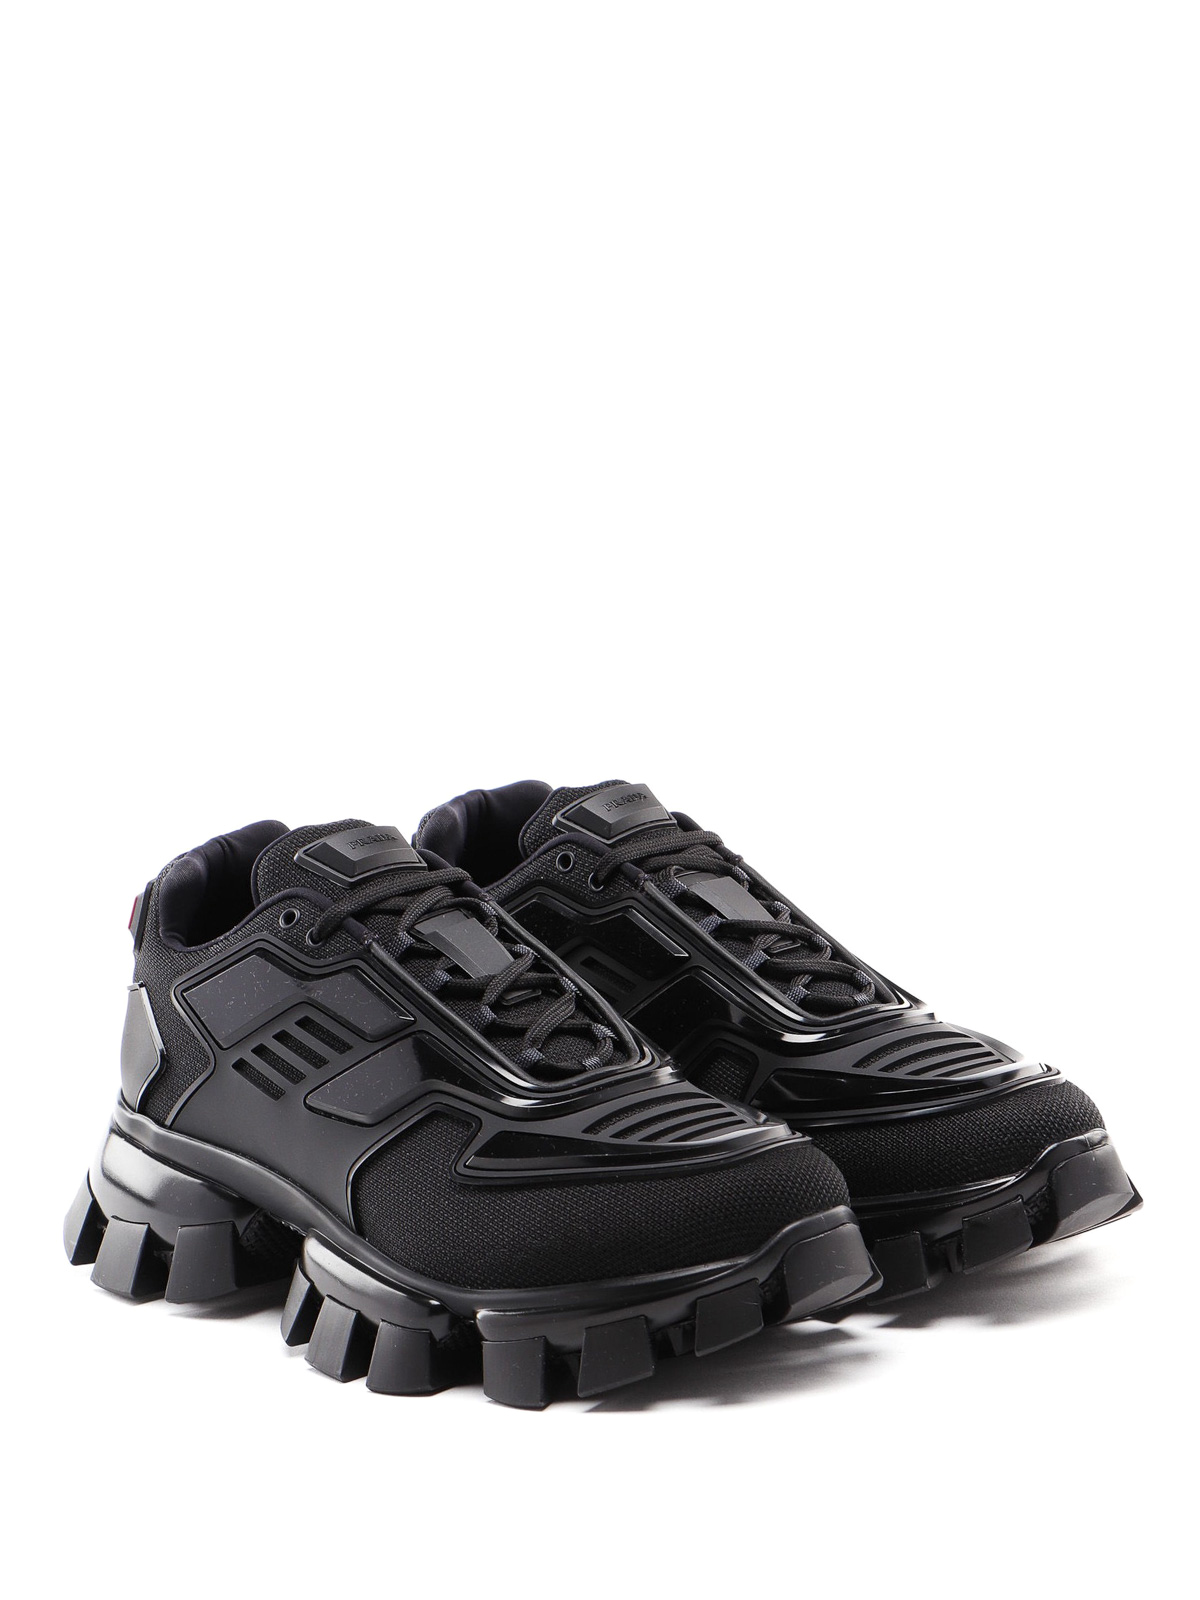 Trainers Prada - Cloudbust Thunder black sneakers 2EG2933KZU002